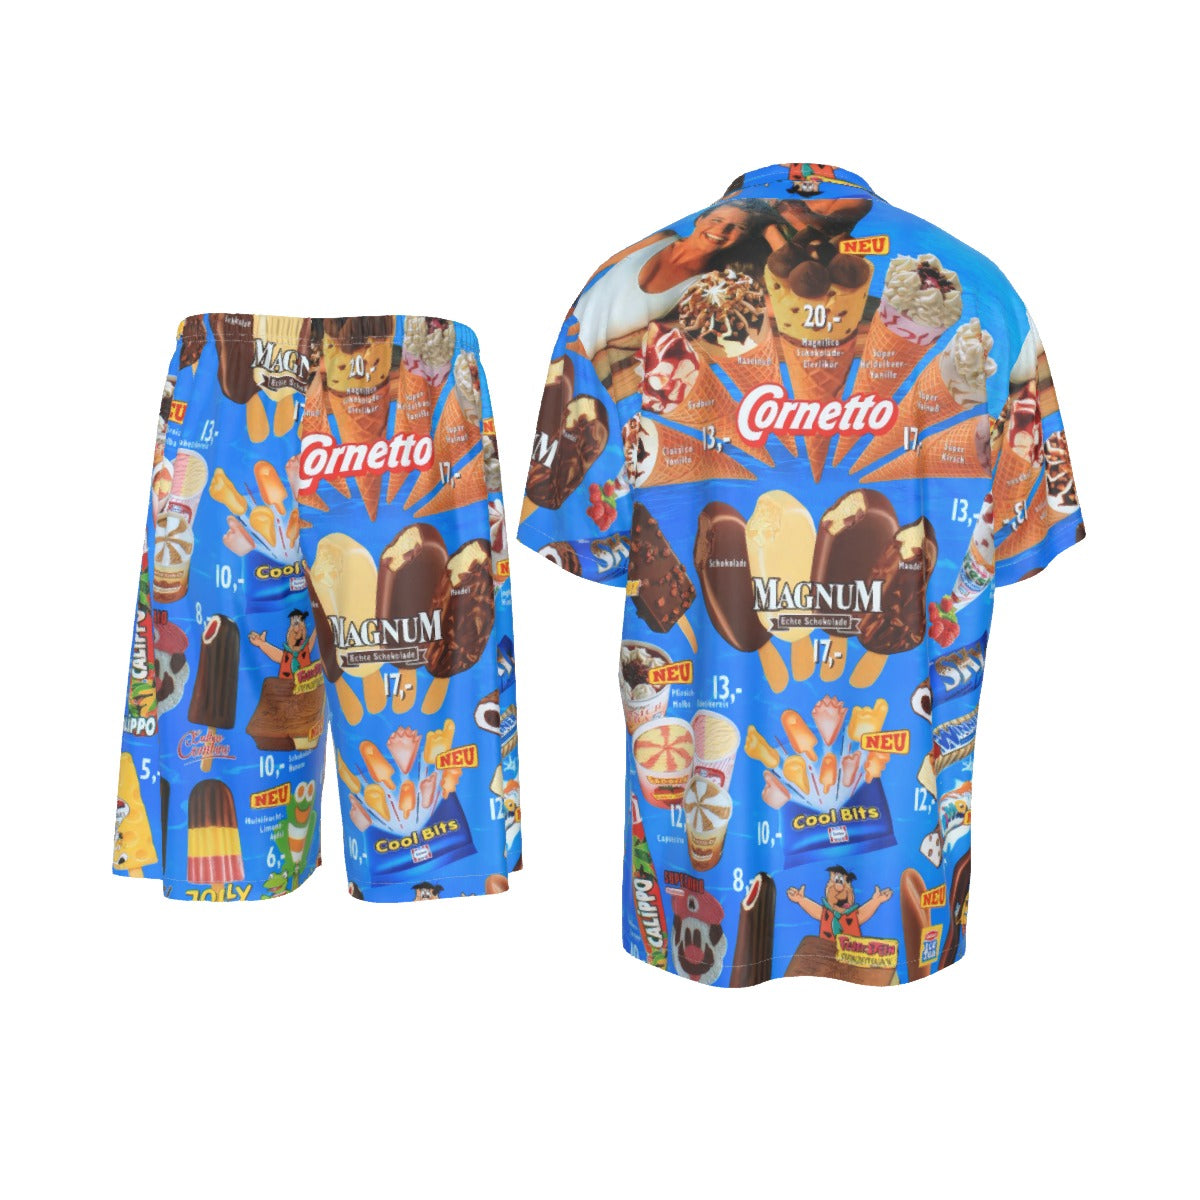 Retro-inspired summer beachwear with a Hawaiian print